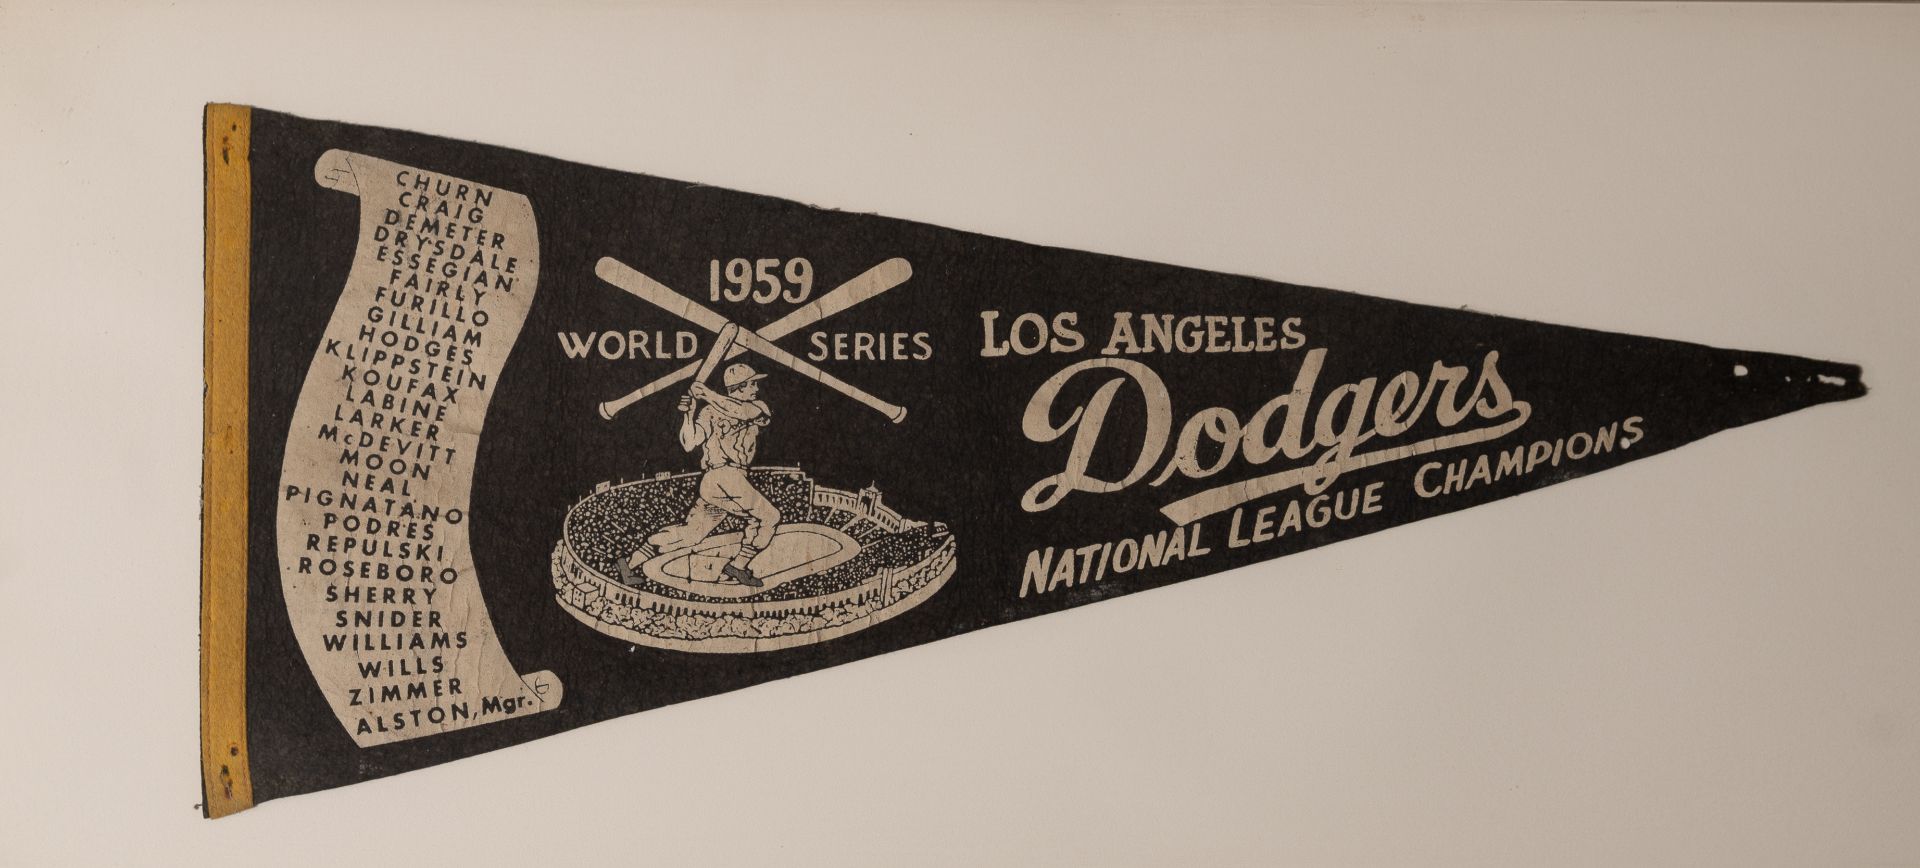 Dodgers 1959 World Series Pennant 39"x17"